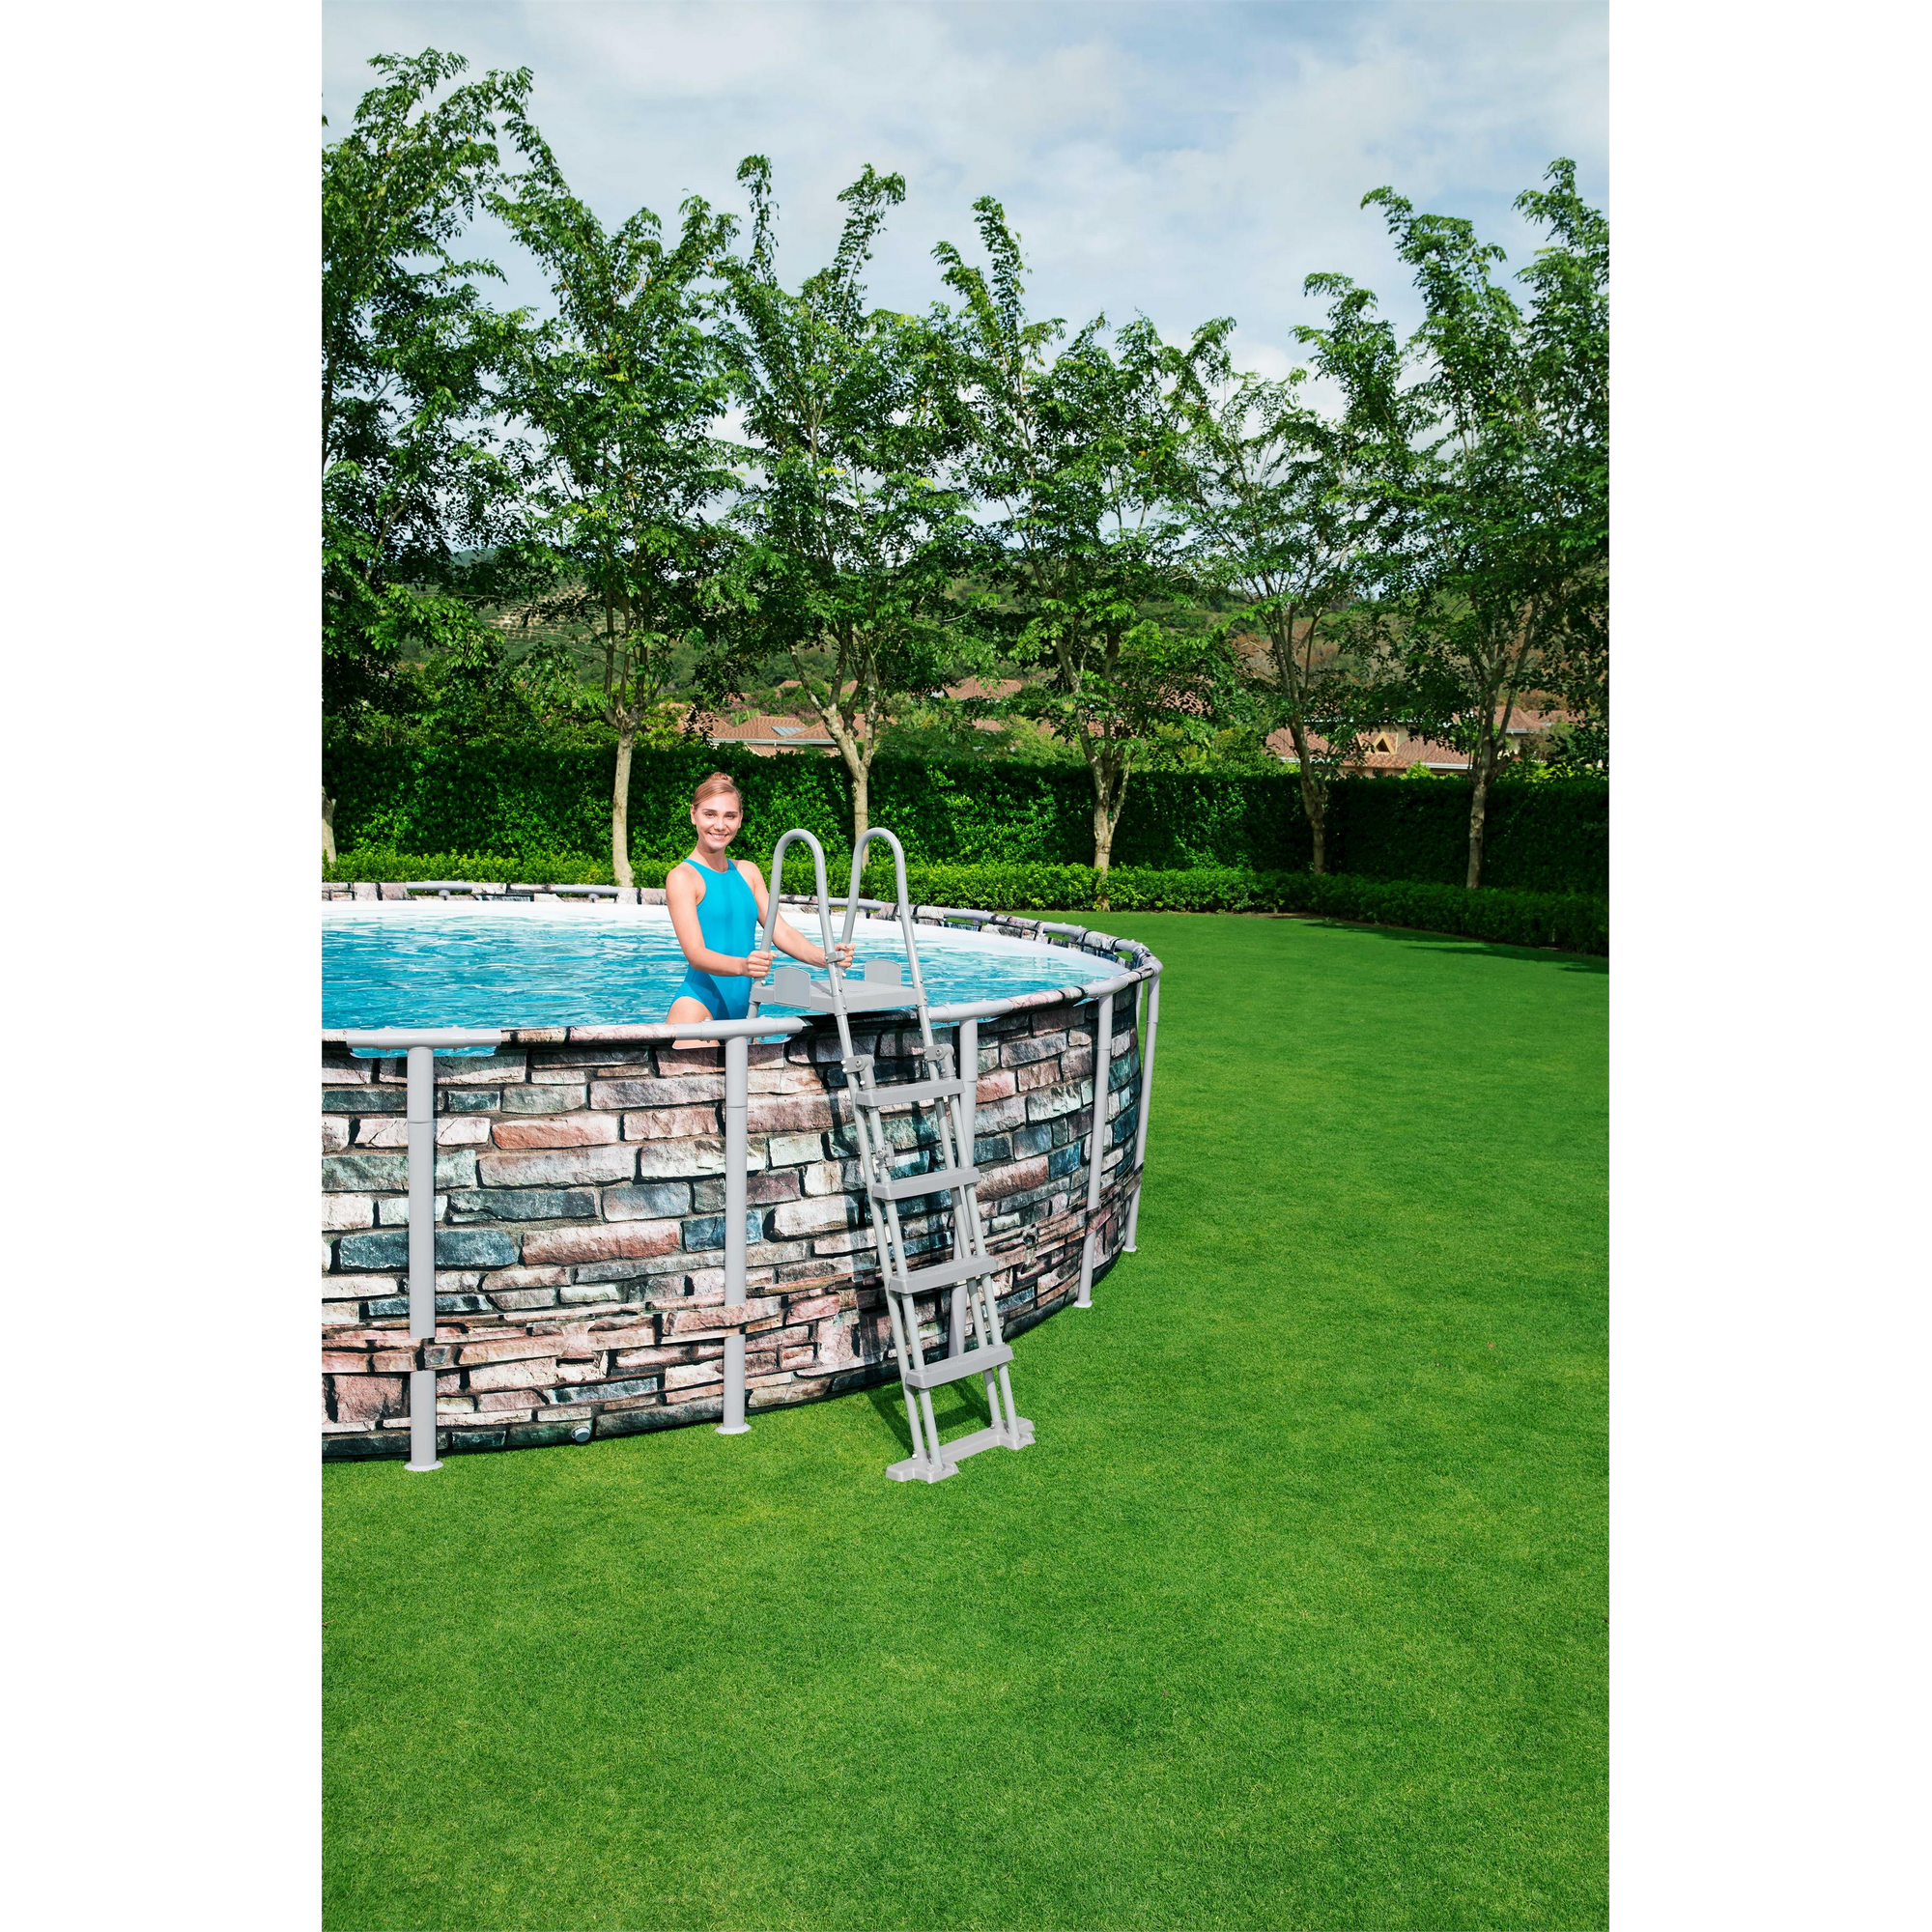 Pool-Übersteigleiter 'Flowclear' 4-stufig 132 cm + product picture